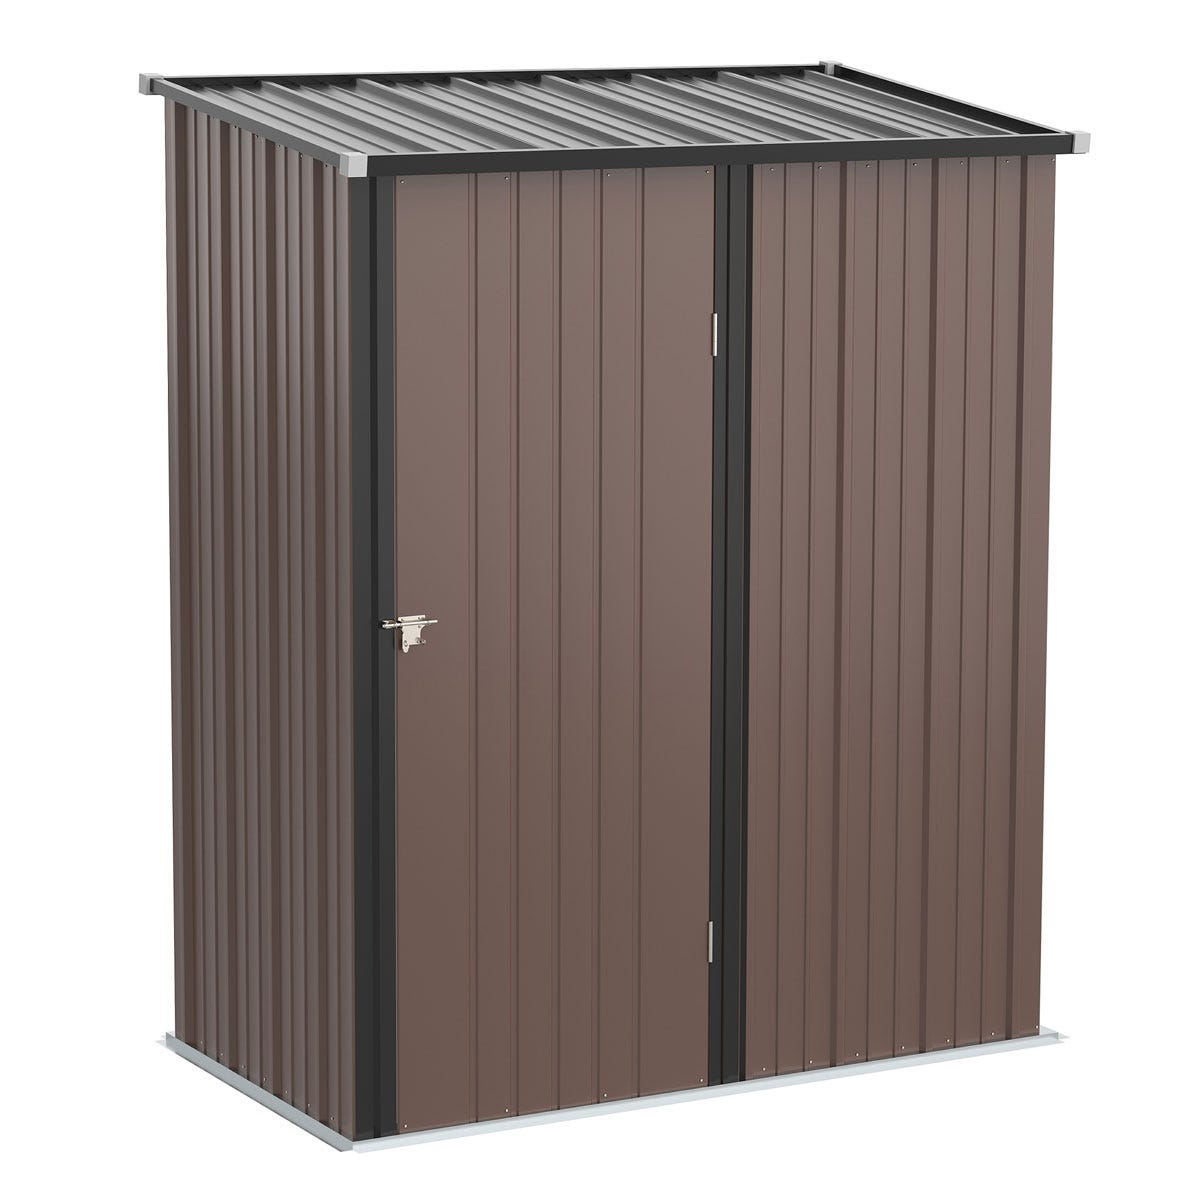 Outsunny Outdoor Steel Storage Shed Steel w/ Lockable Door - Brown